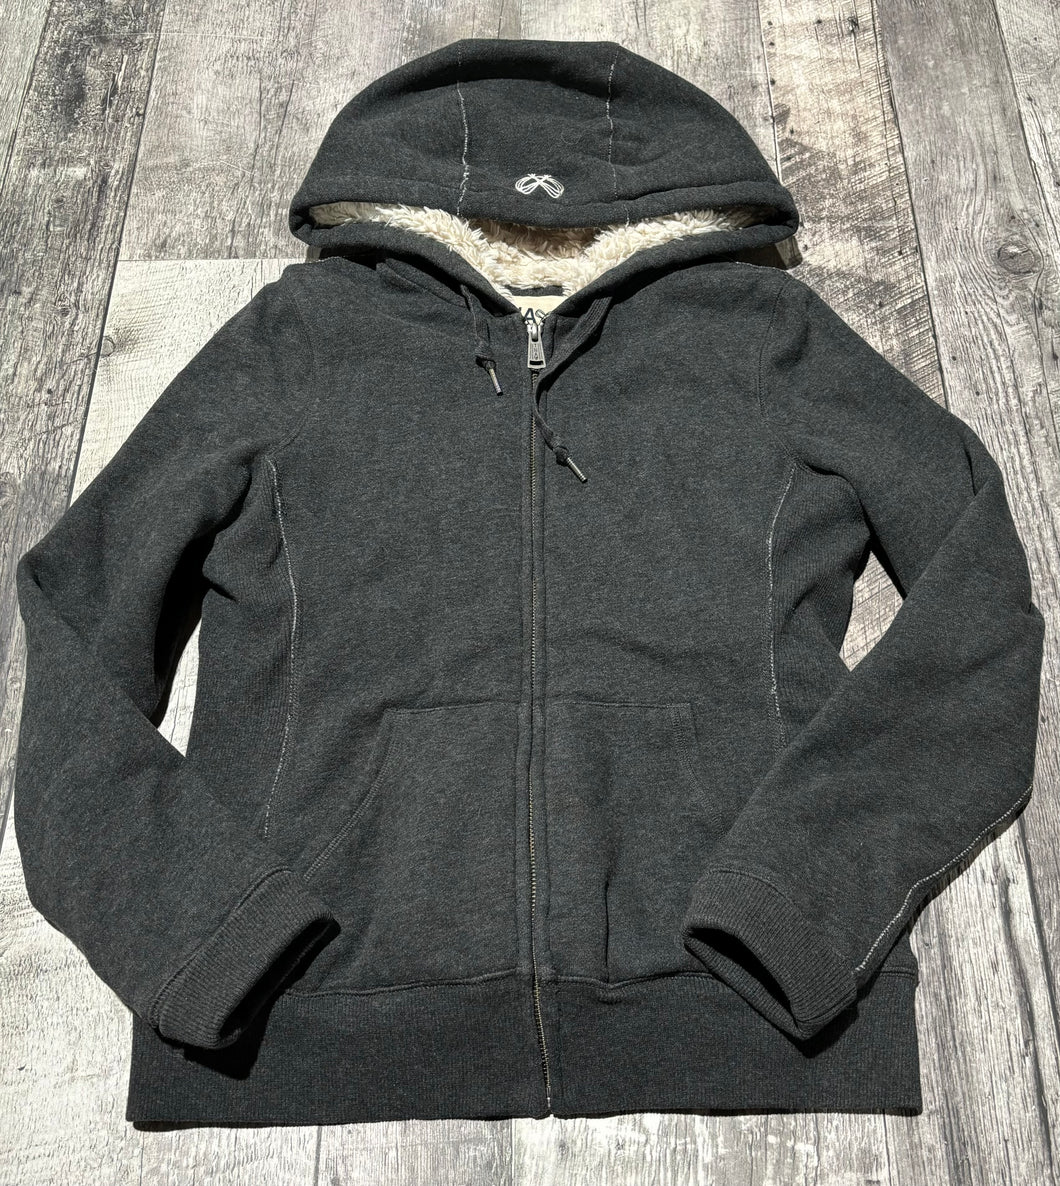 Tna dark grey hoodie - Hers size M